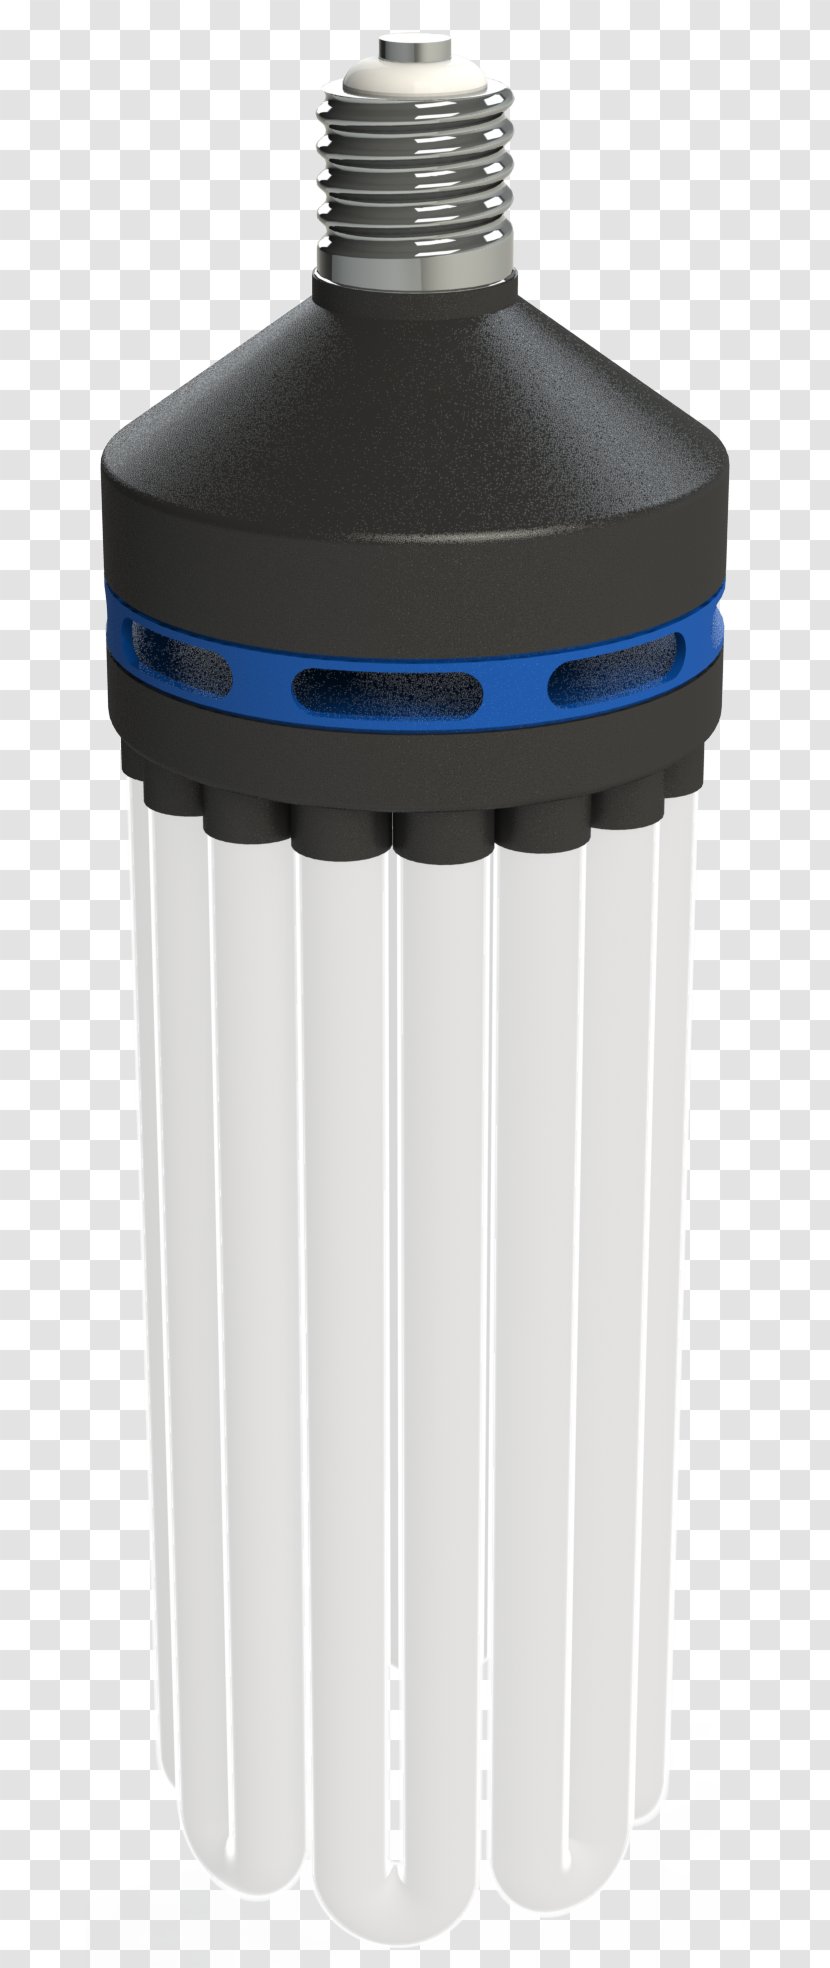 Compact Fluorescent Lamp Gróðurlausnir Light-emitting Diode Illuminance Meter - CFL Transparent PNG